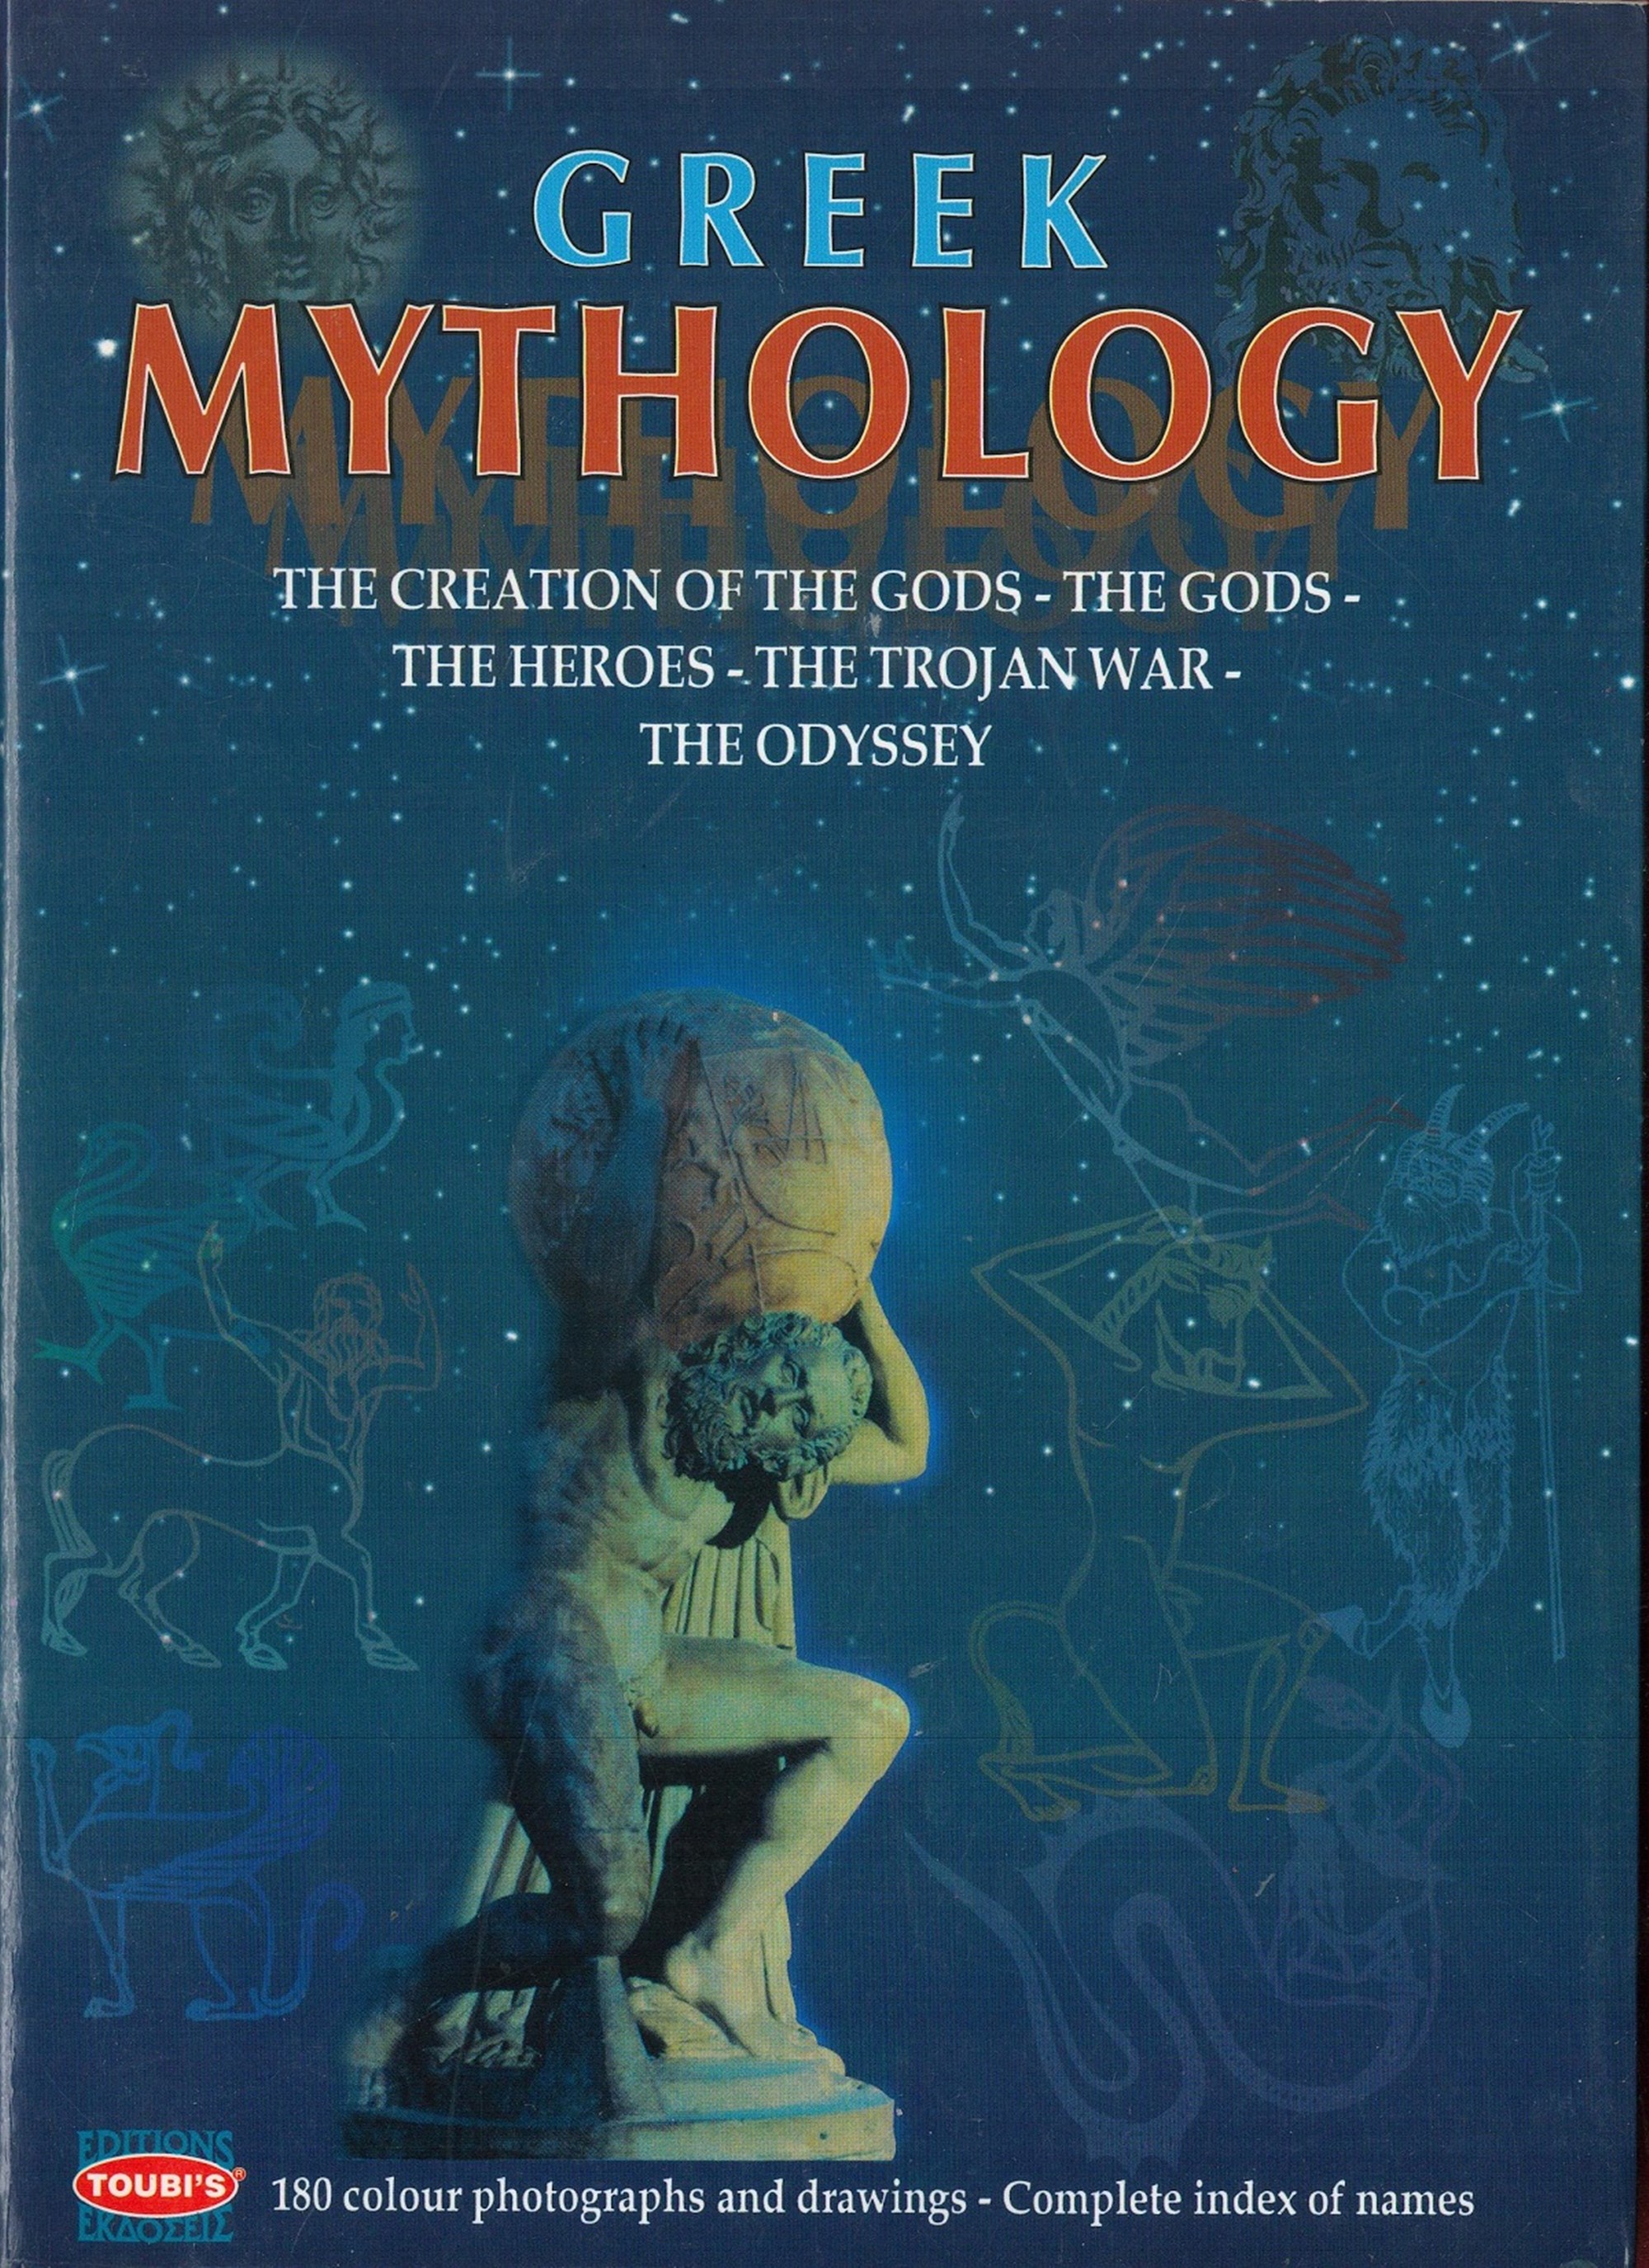 Greek Mythology The Creation of the Gods The Heroes The Trojan War The Odyssey by Sofia Souli